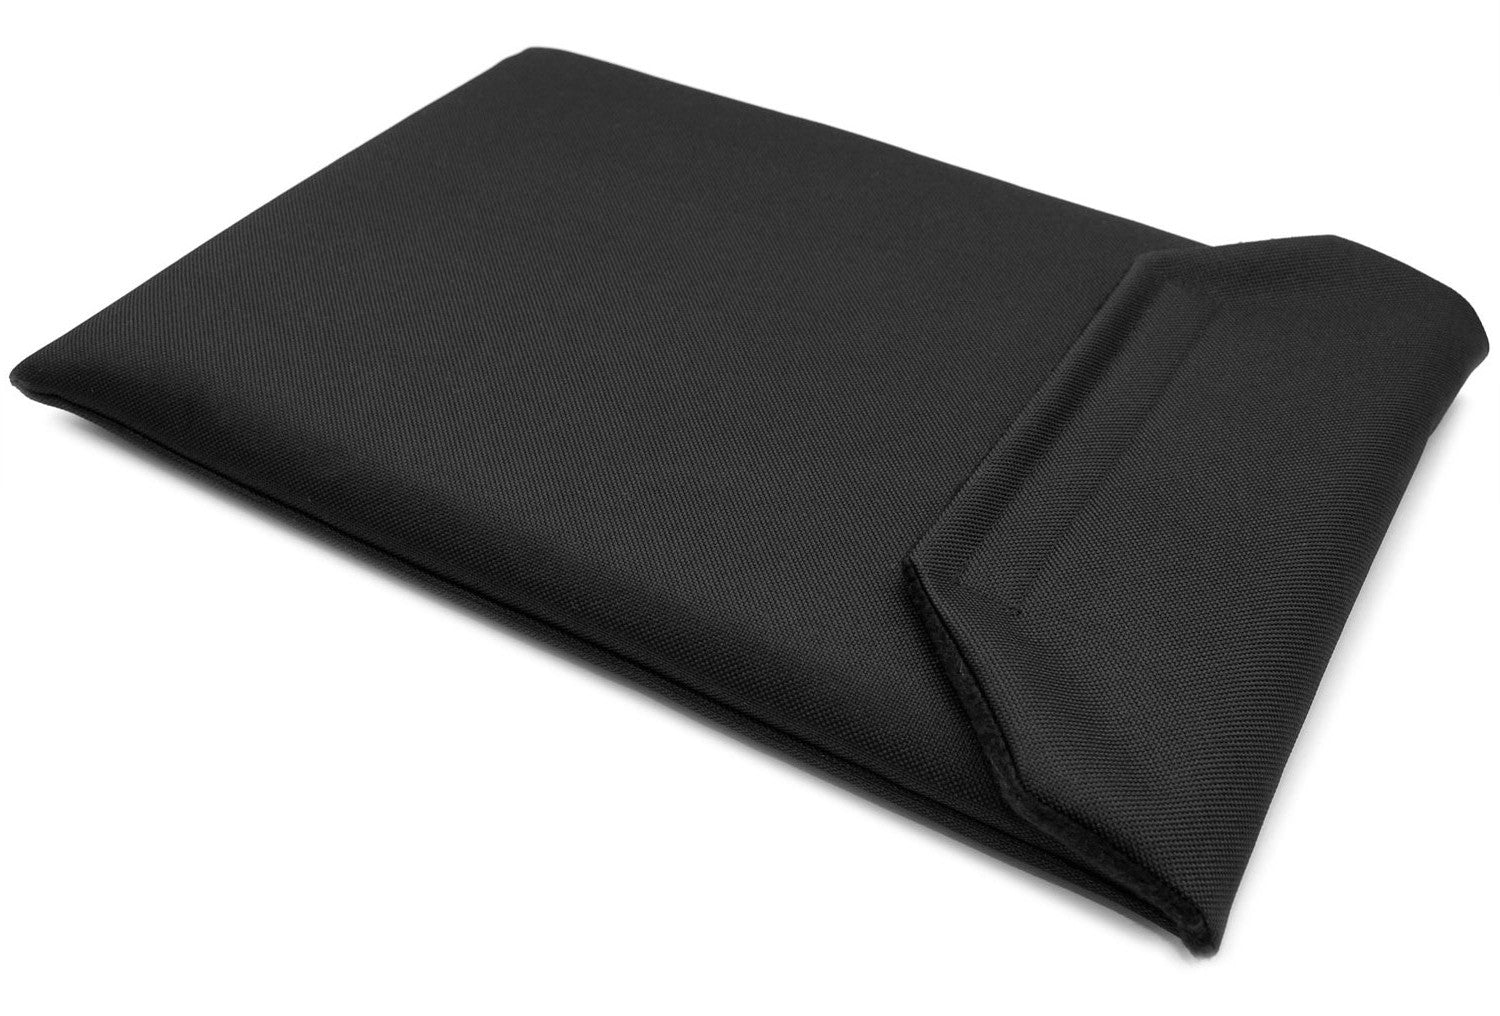 Dell Inspiron 15 7000 Sleeve Case - Black